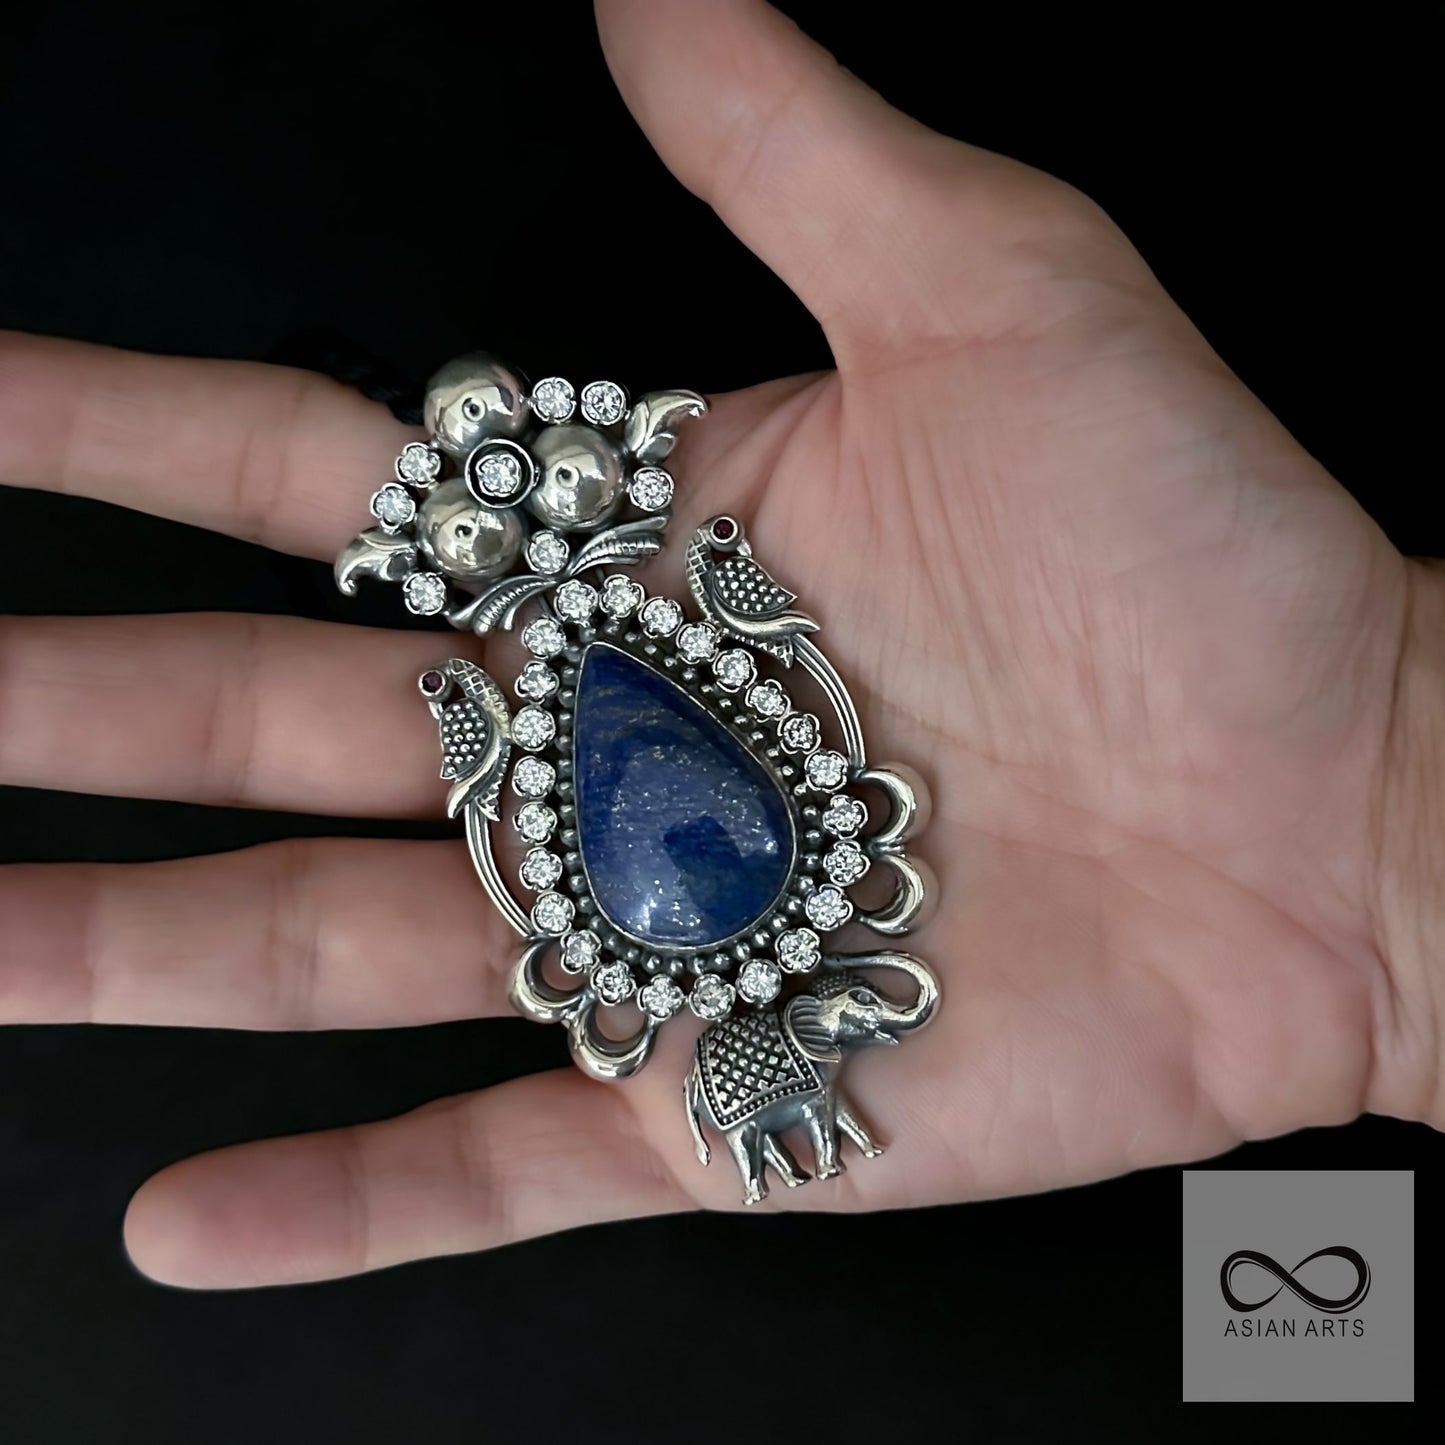 Contemporary Silver Lapiz Lazuli pendant with elephant carving